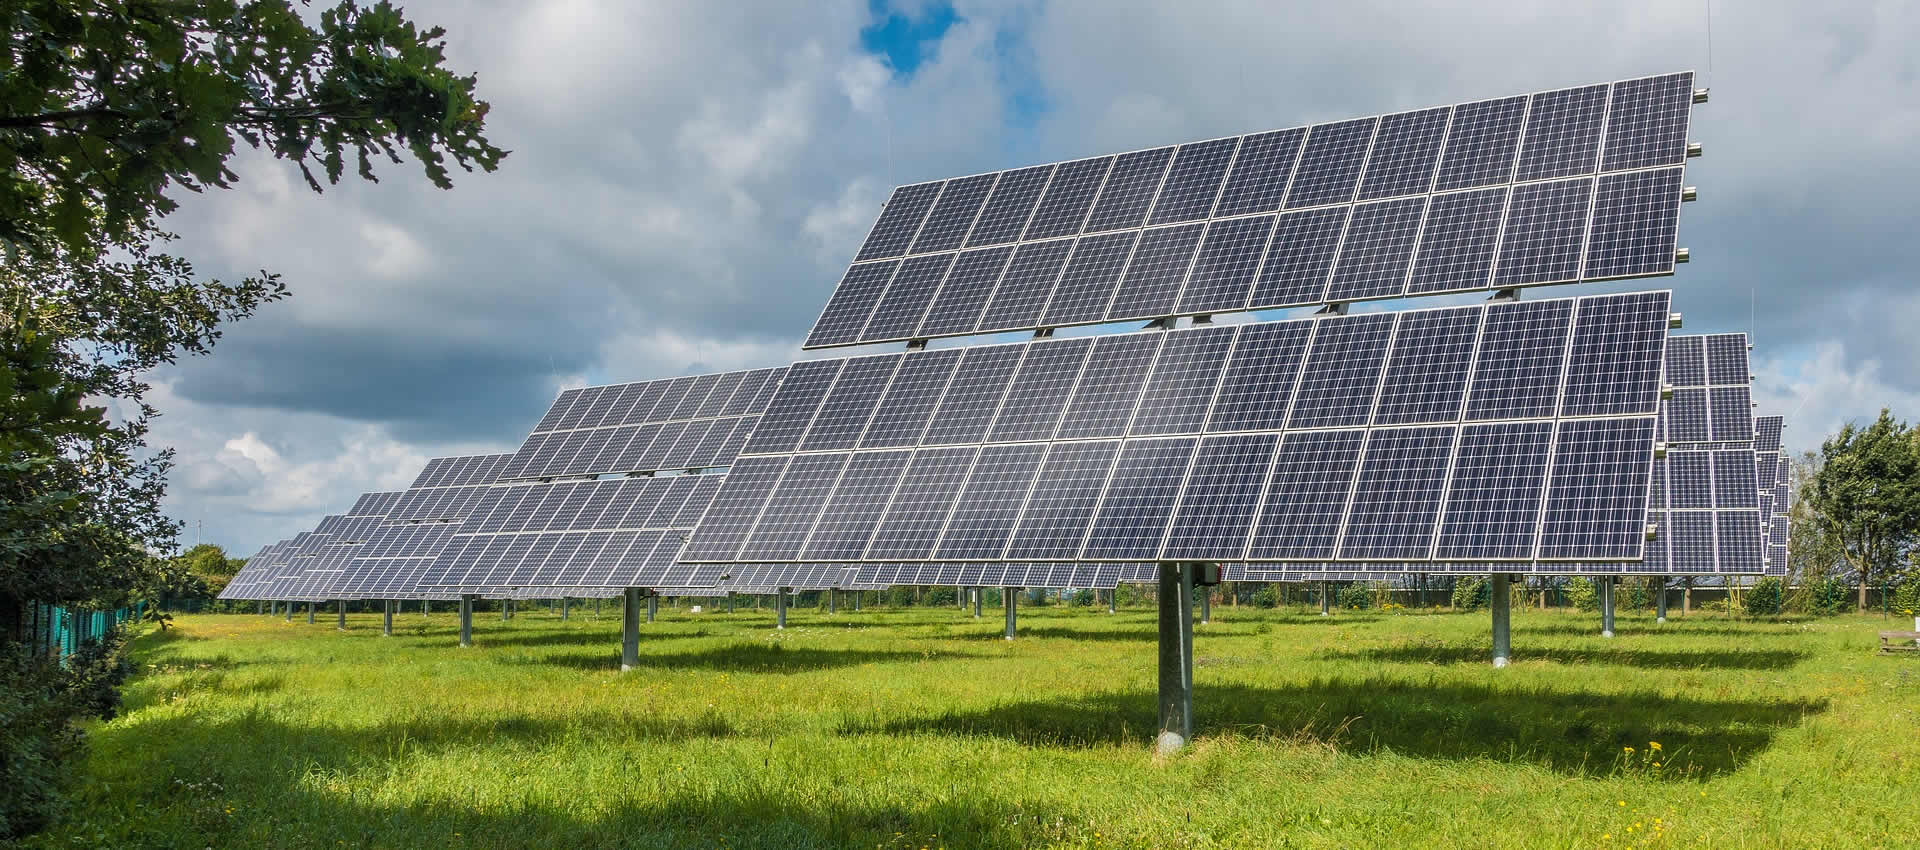 African Solar Power Systems Ltd